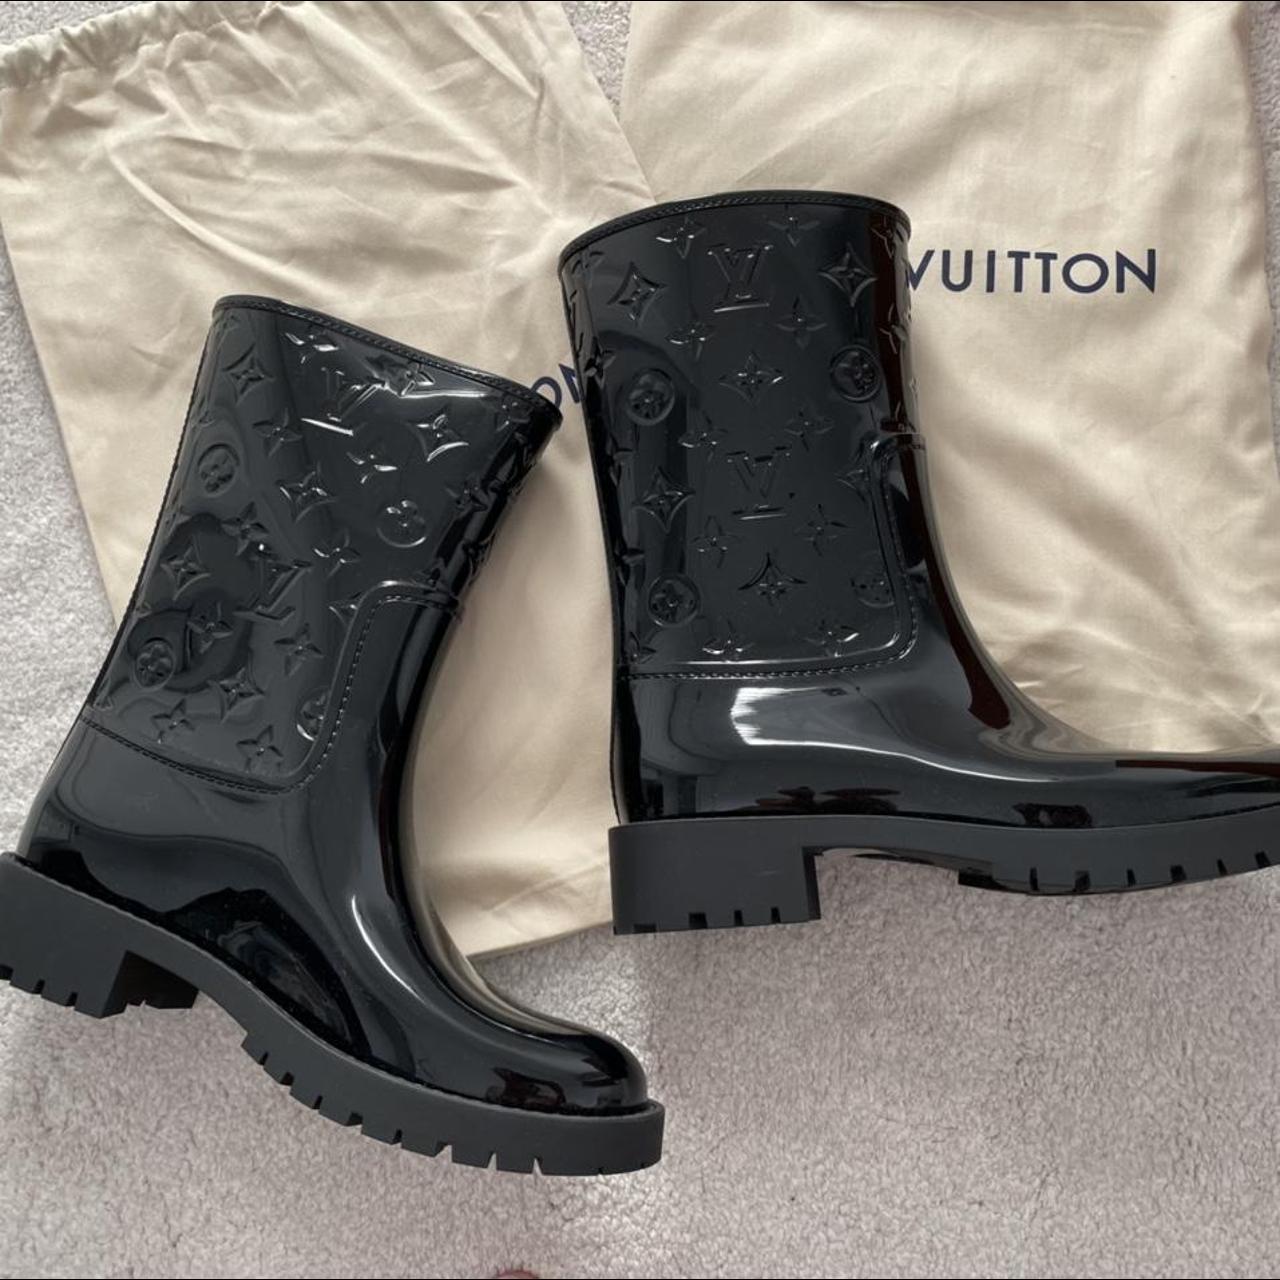 Louis Vuitton Drops Flat Half Boot BLACK. Size 35.0